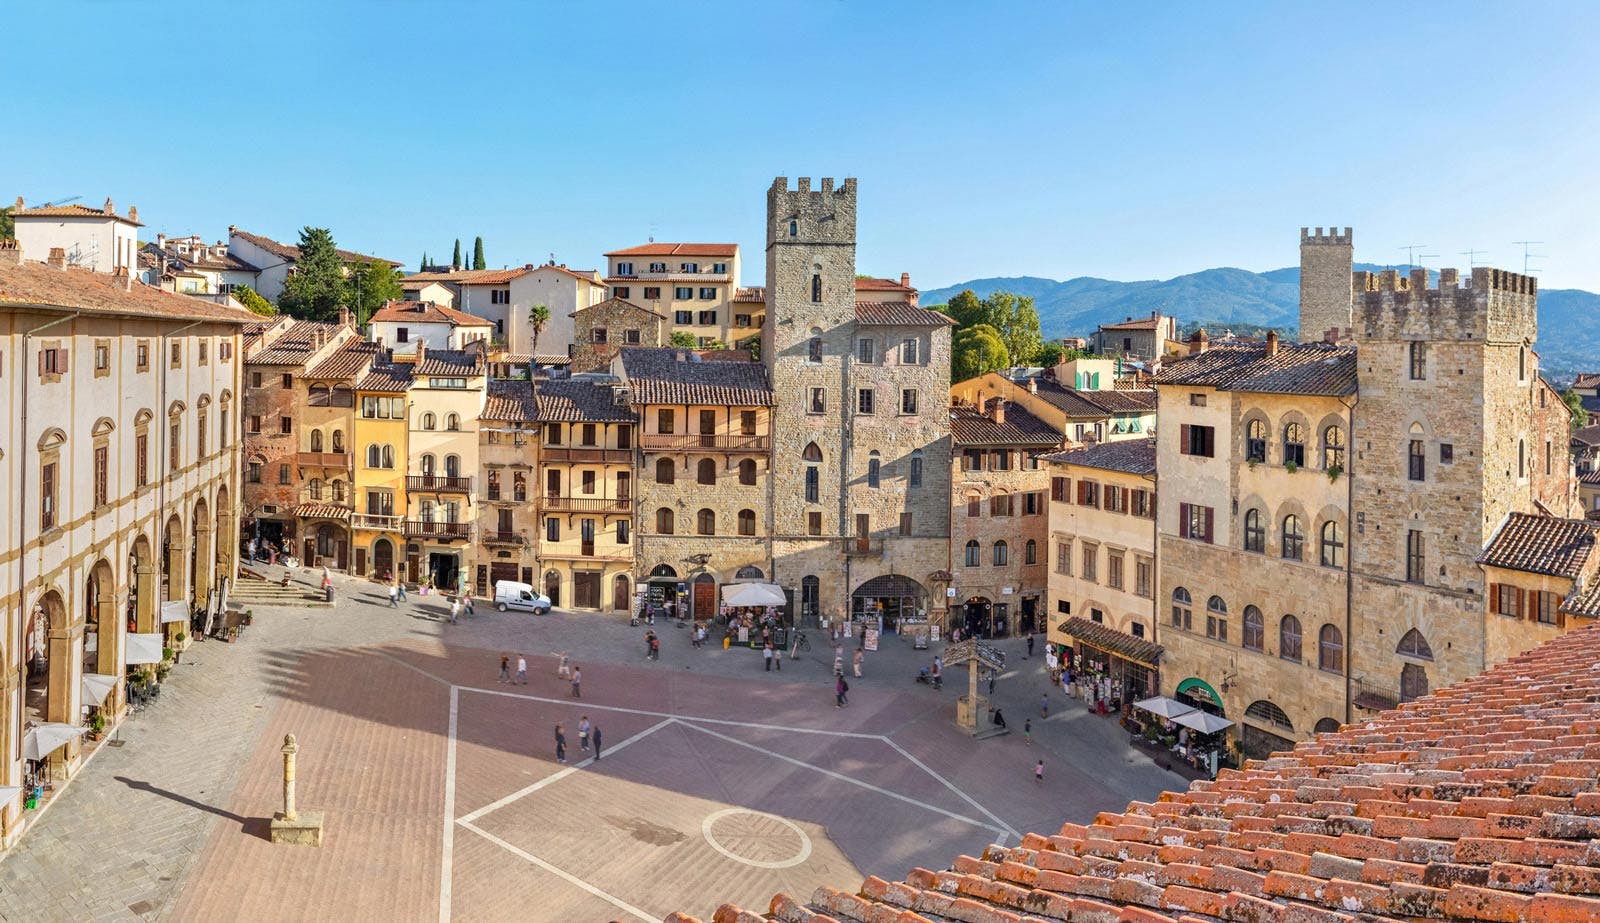 Arezzo town plaza